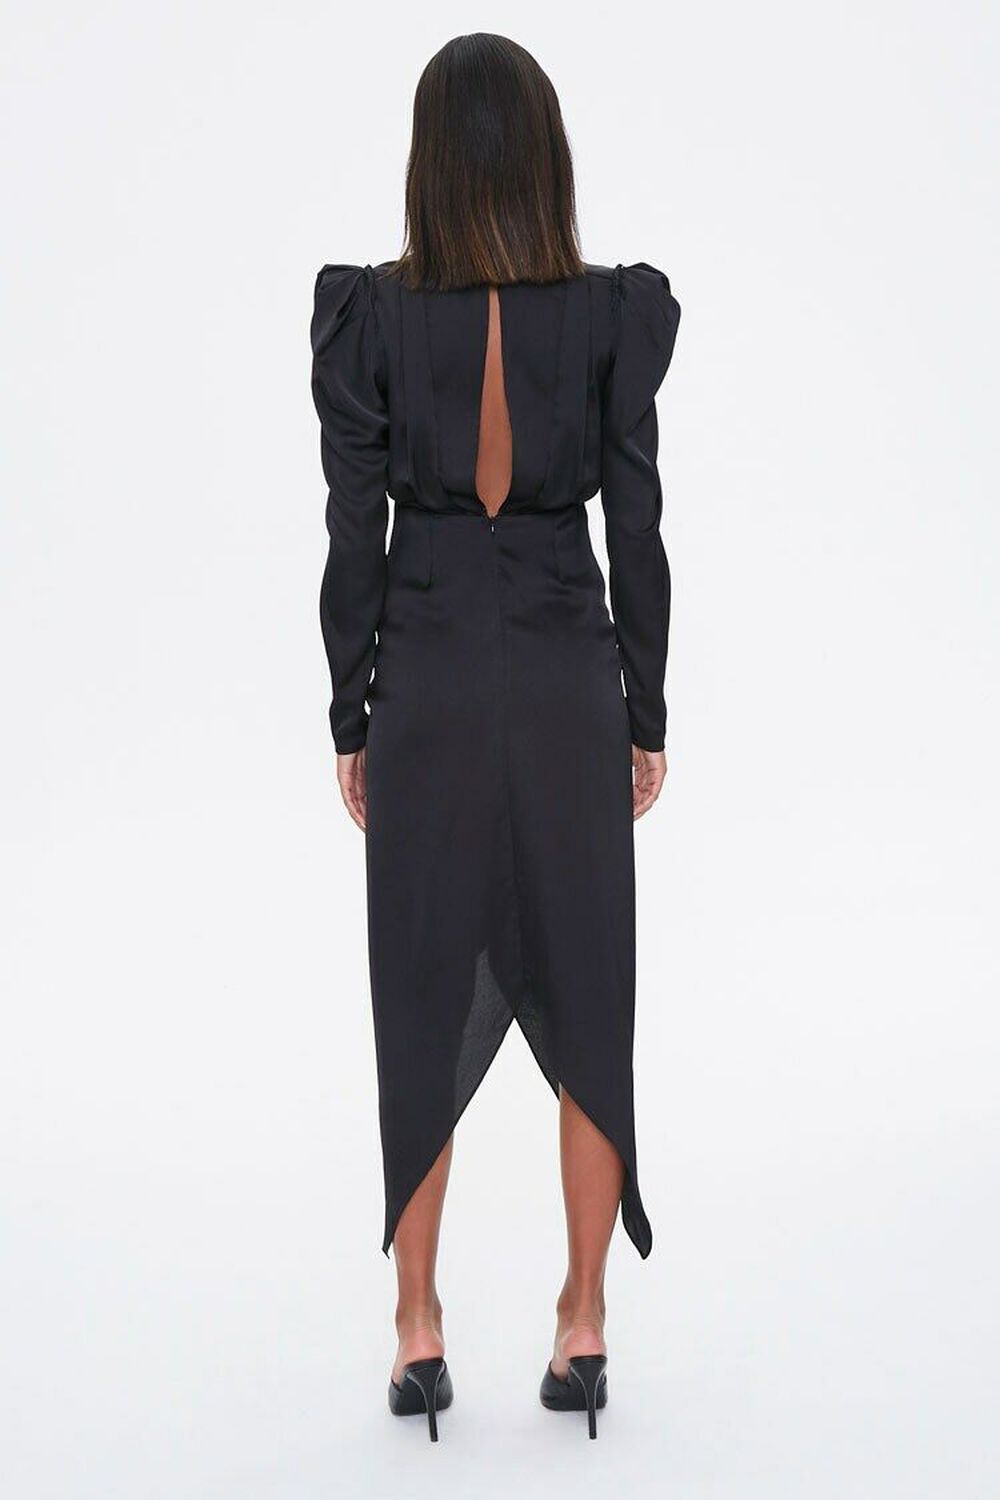 BLACK Ruched Puff-Sleeve Midi Dress, image 3